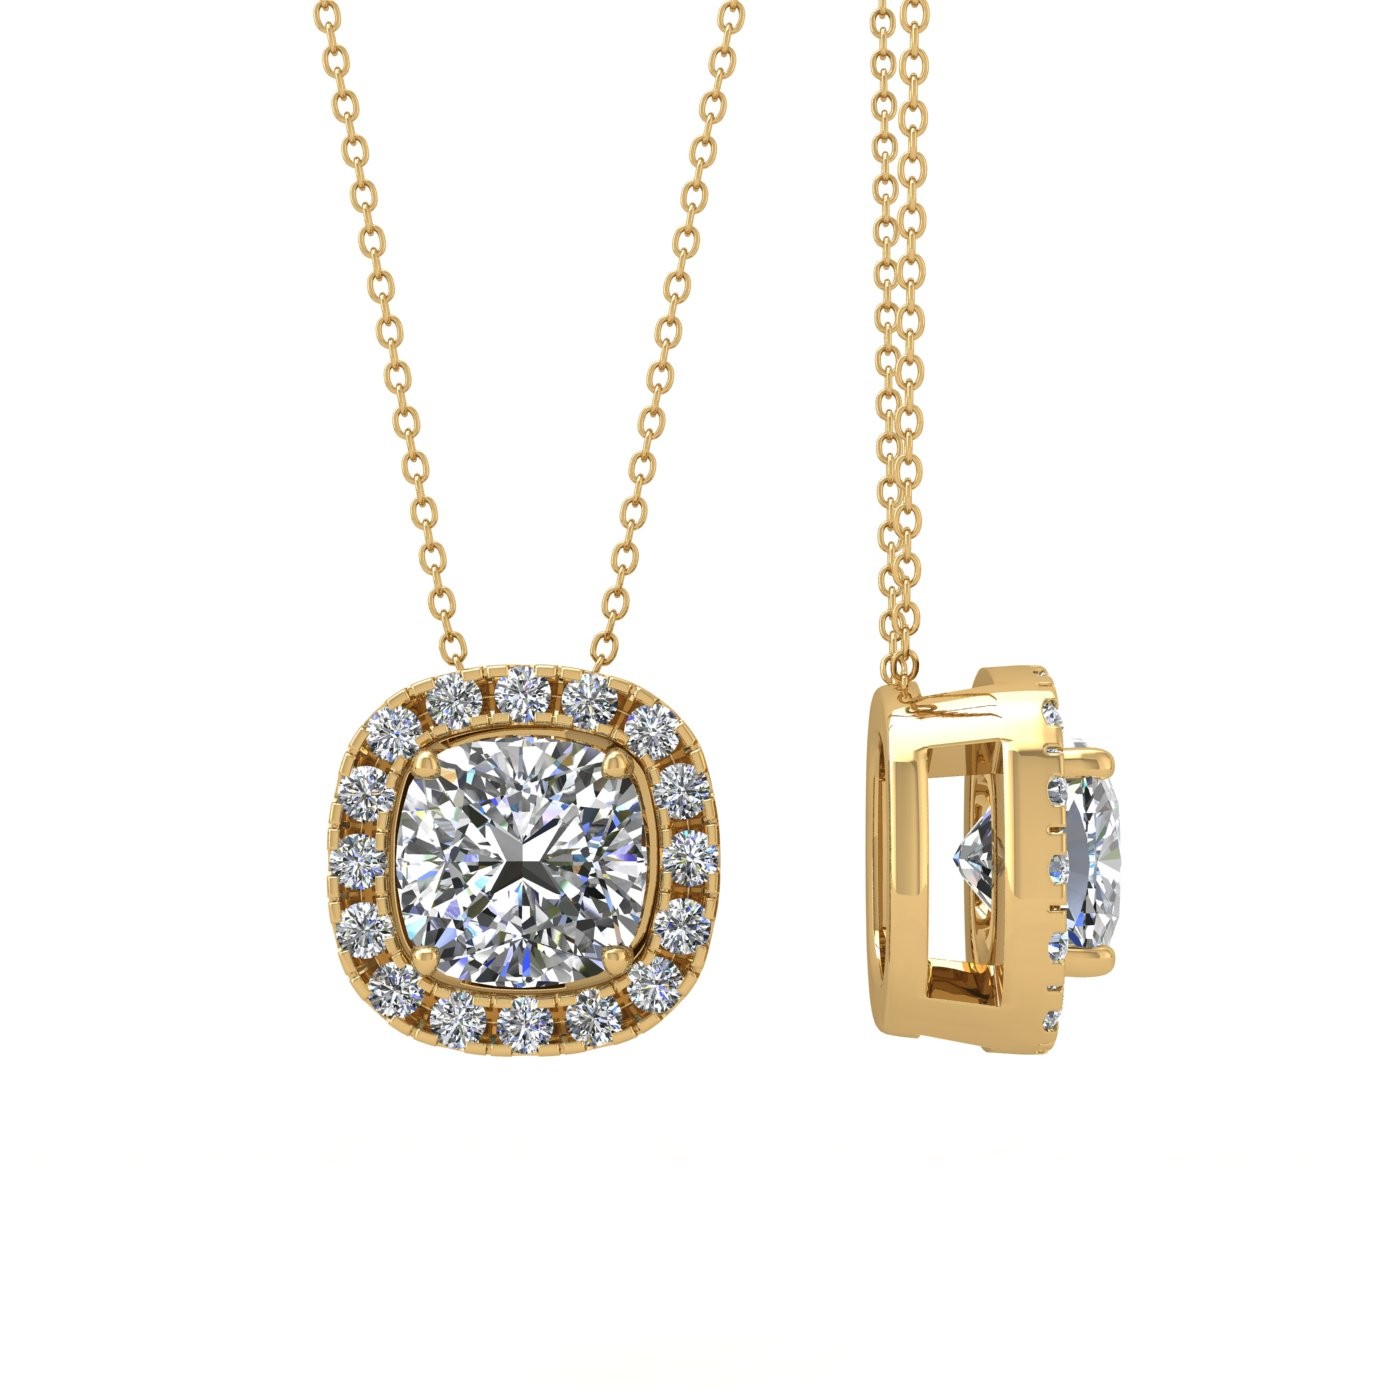 18k yellow gold  2,5 ct 4 prongs cushion shape diamond pendant with diamond pavÉ set halo Photos & images